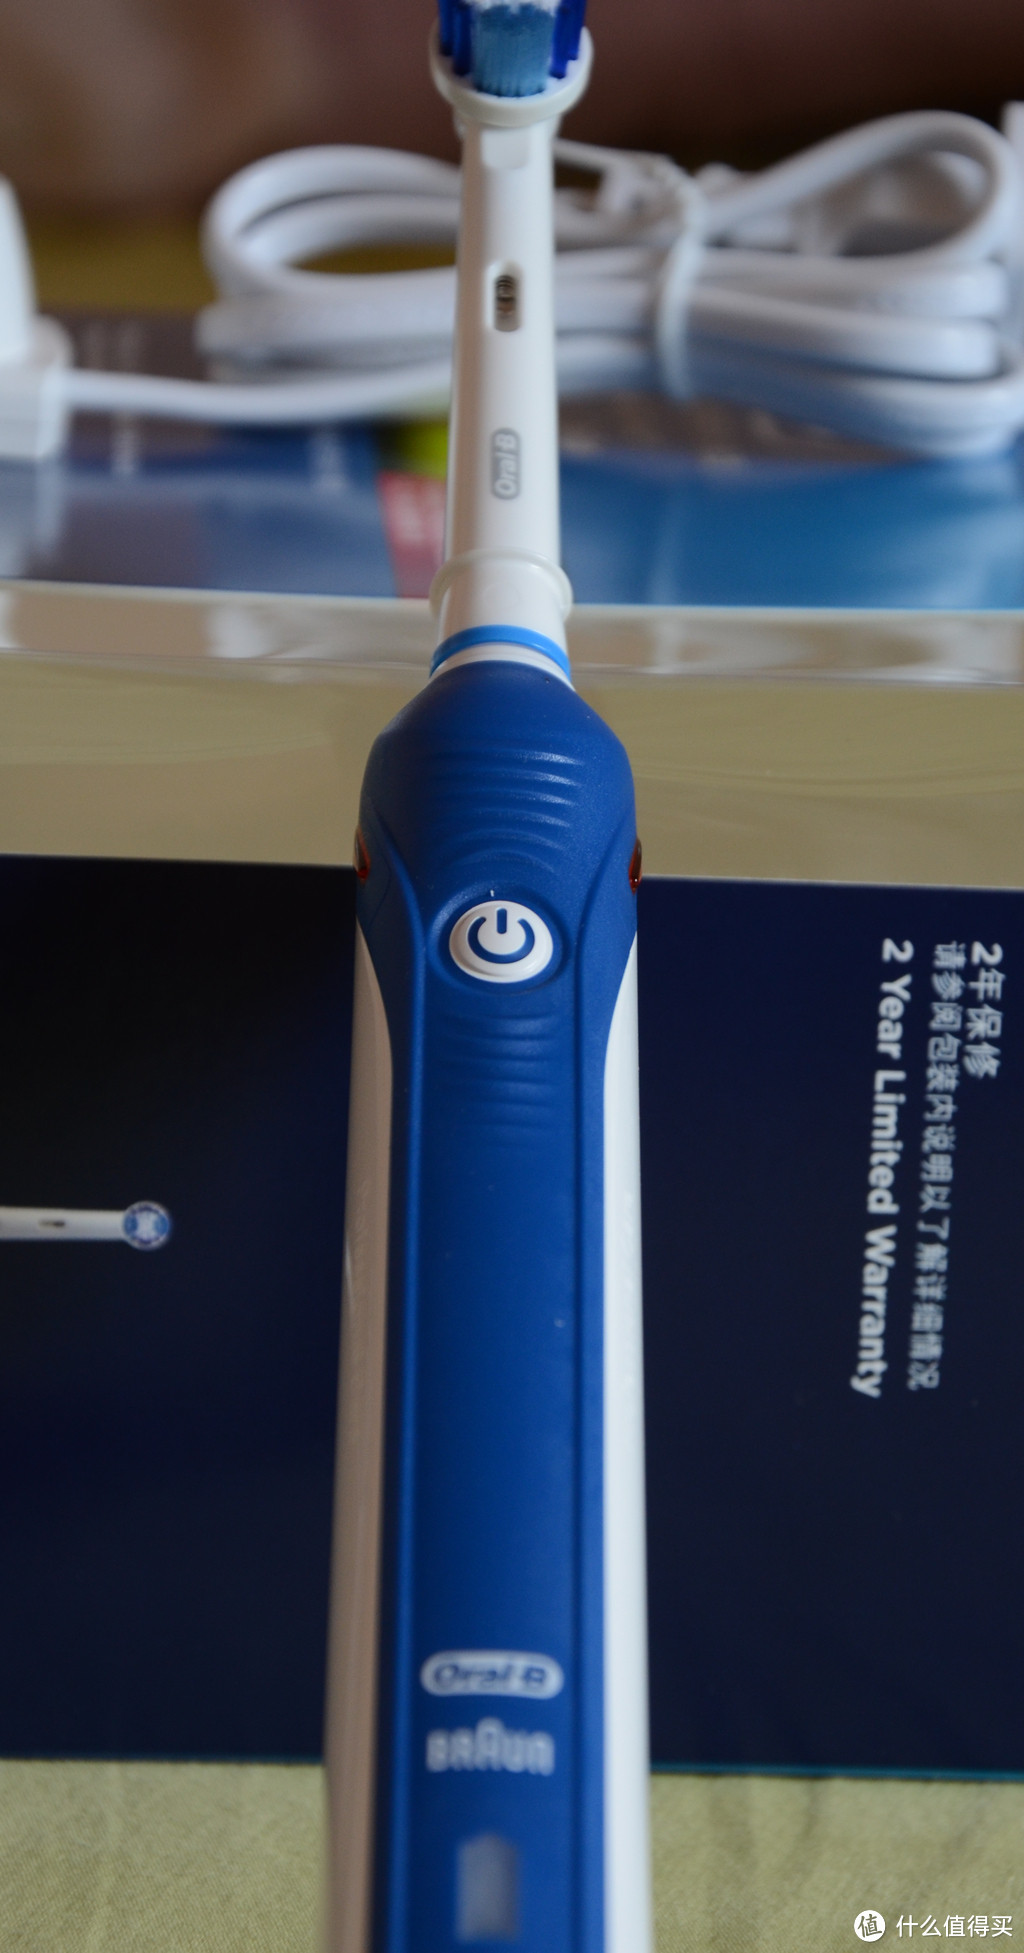 BRAUN 博朗 Oral-B 欧乐B D20.545.3 deluxe 专业护理 电动牙刷